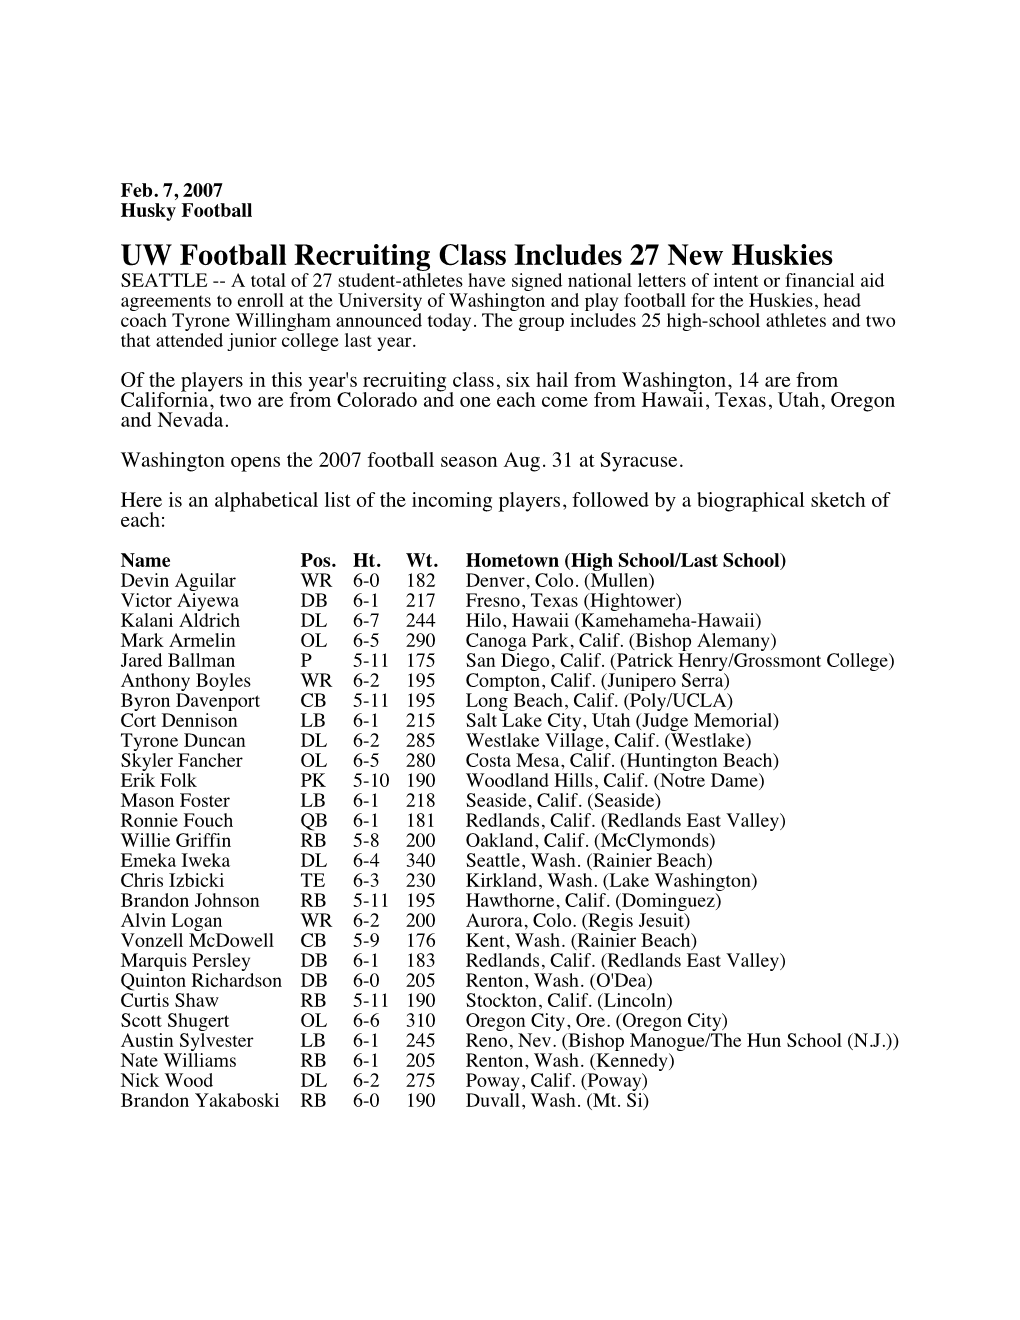 UW Football Recruiting Class Includes 27 New Huskies